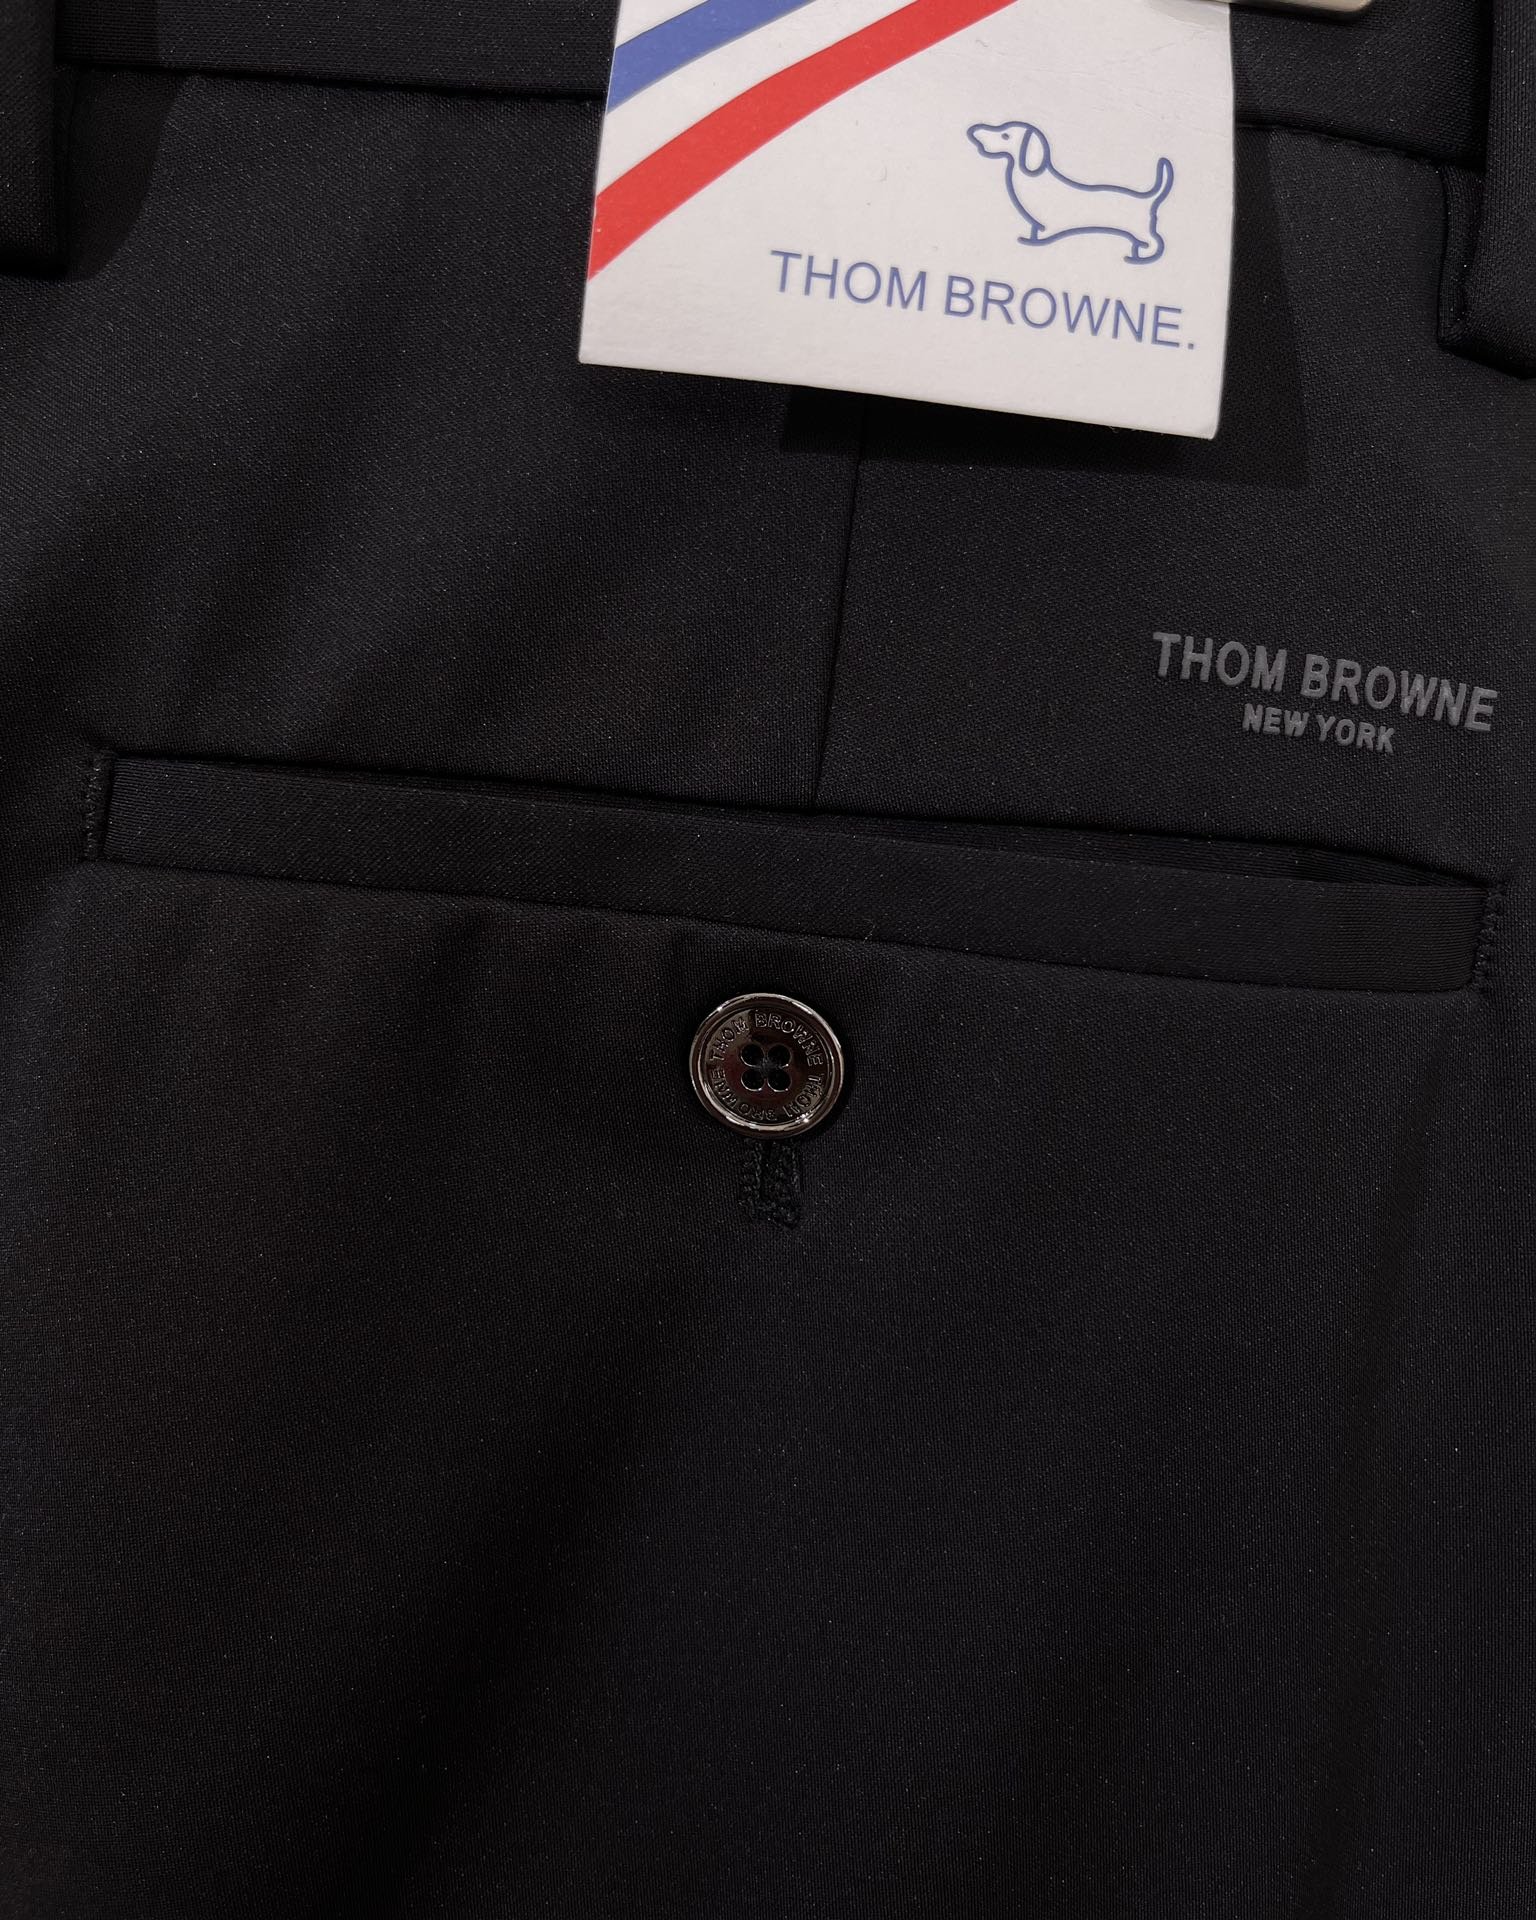 ThomBrowne汤姆布朗款式男款薄款高端休闲裤西裤长裤mensPantssize29/30/31/3